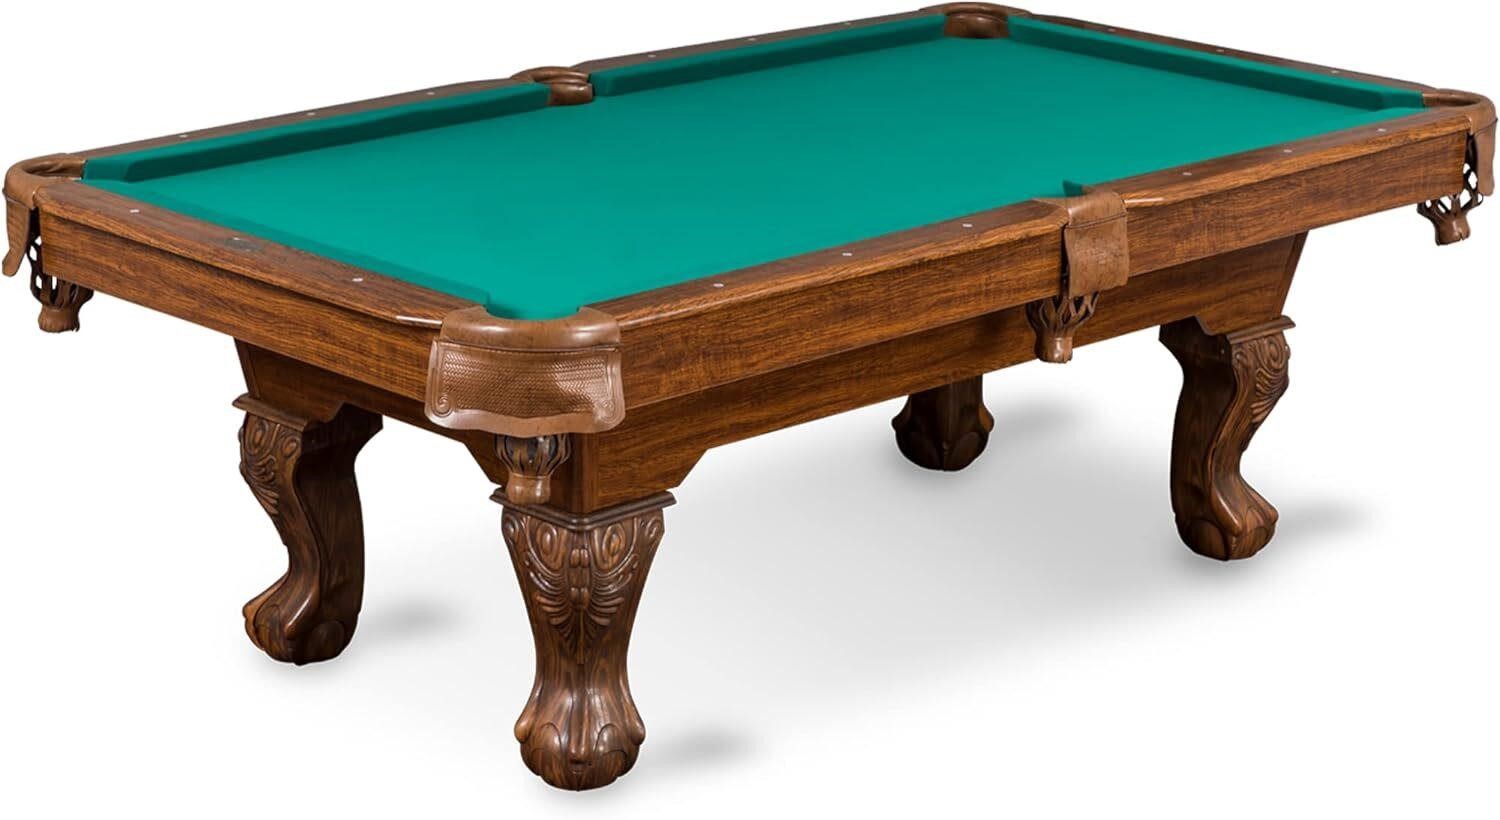 EastPoint Sports Billiard Pool Table - Felt Top